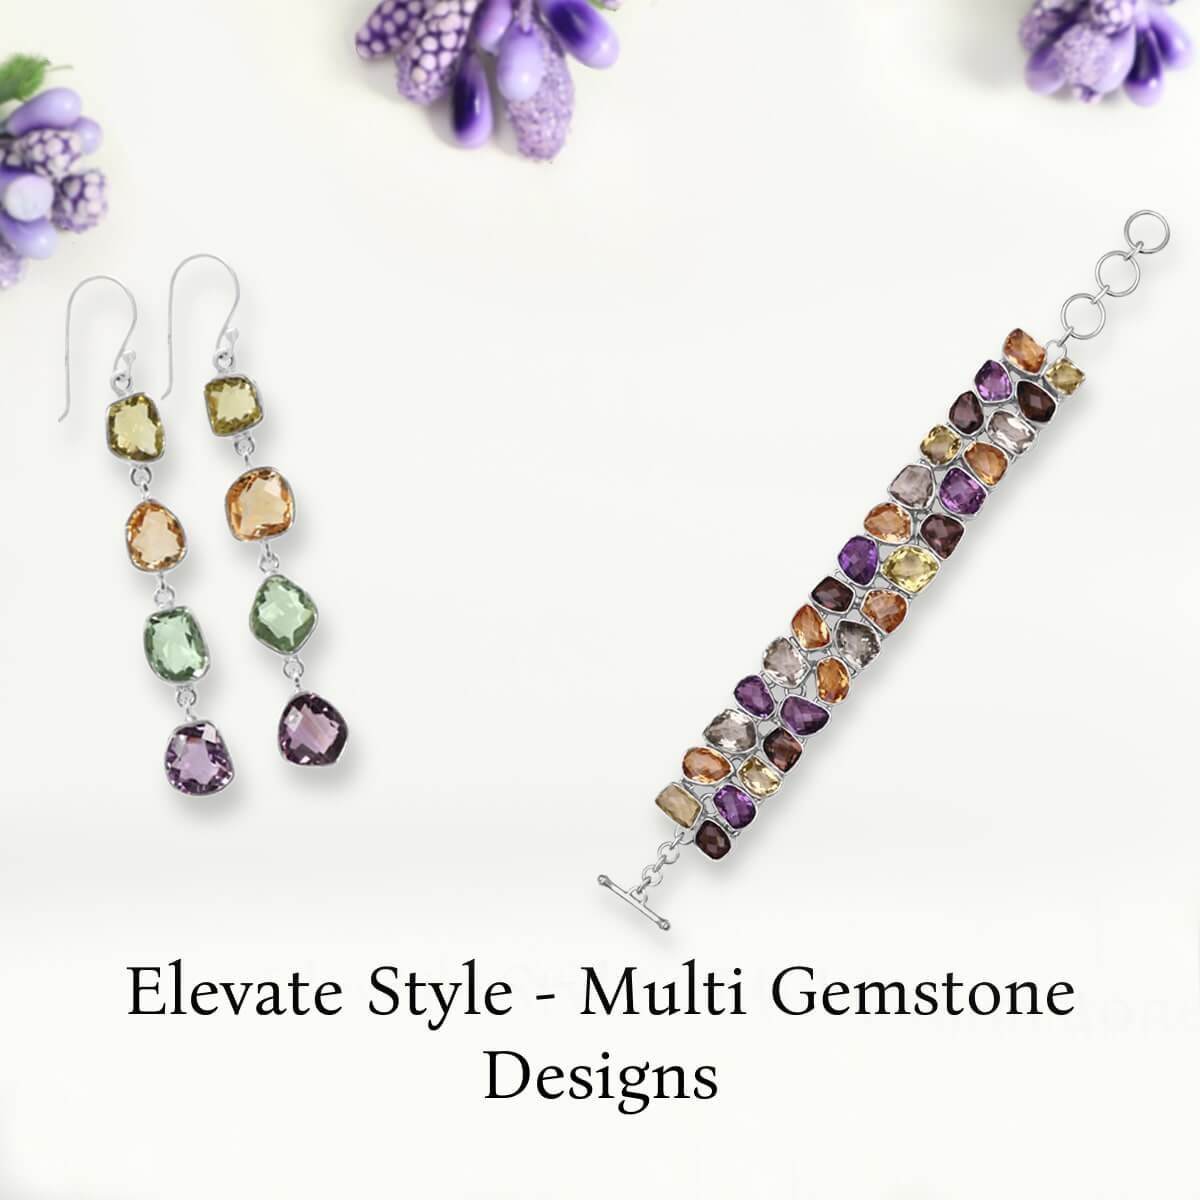 Ways to purchase Multi Gemstone Designer Jewelry